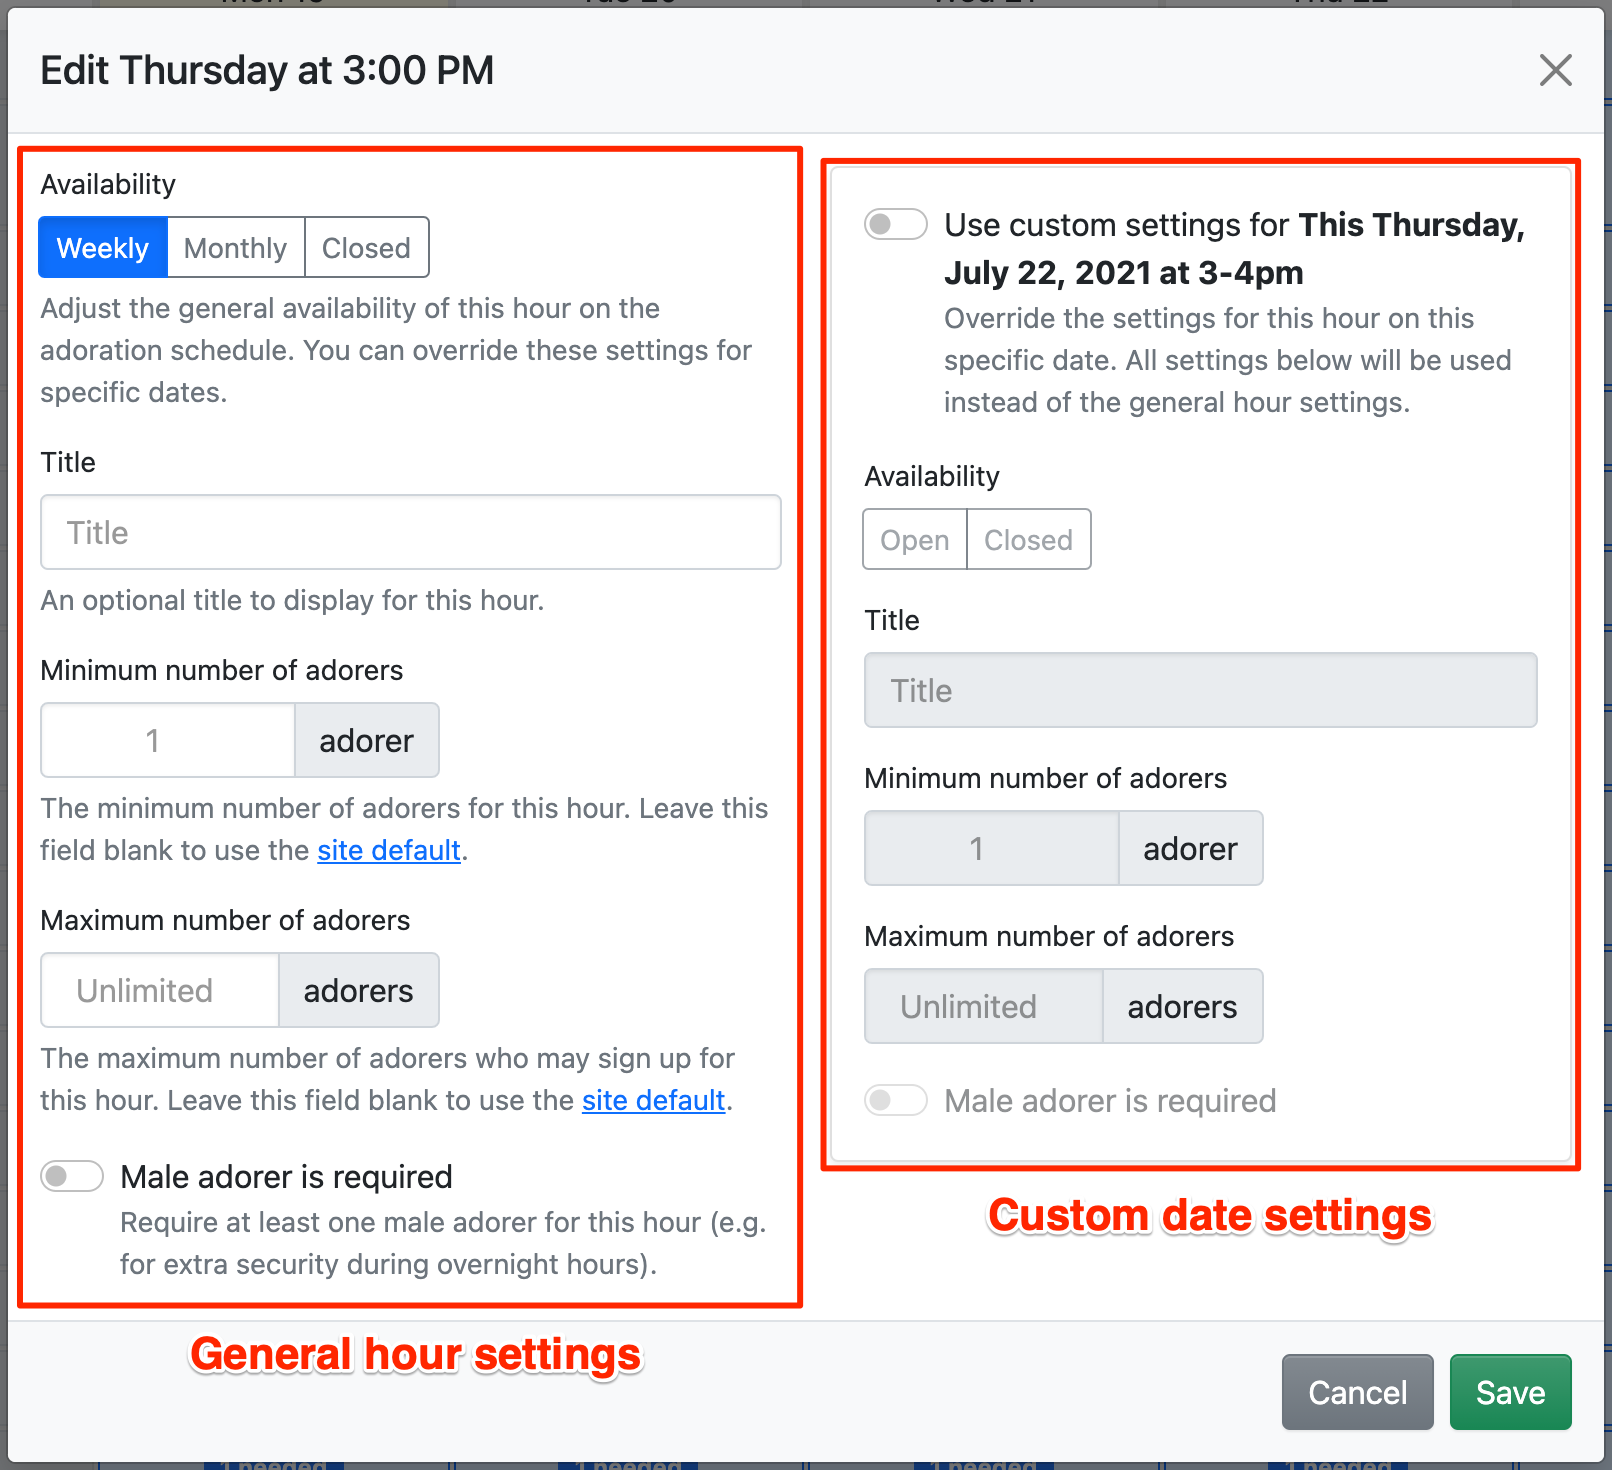 Edit the general hour settings and optionally add custom settings per date